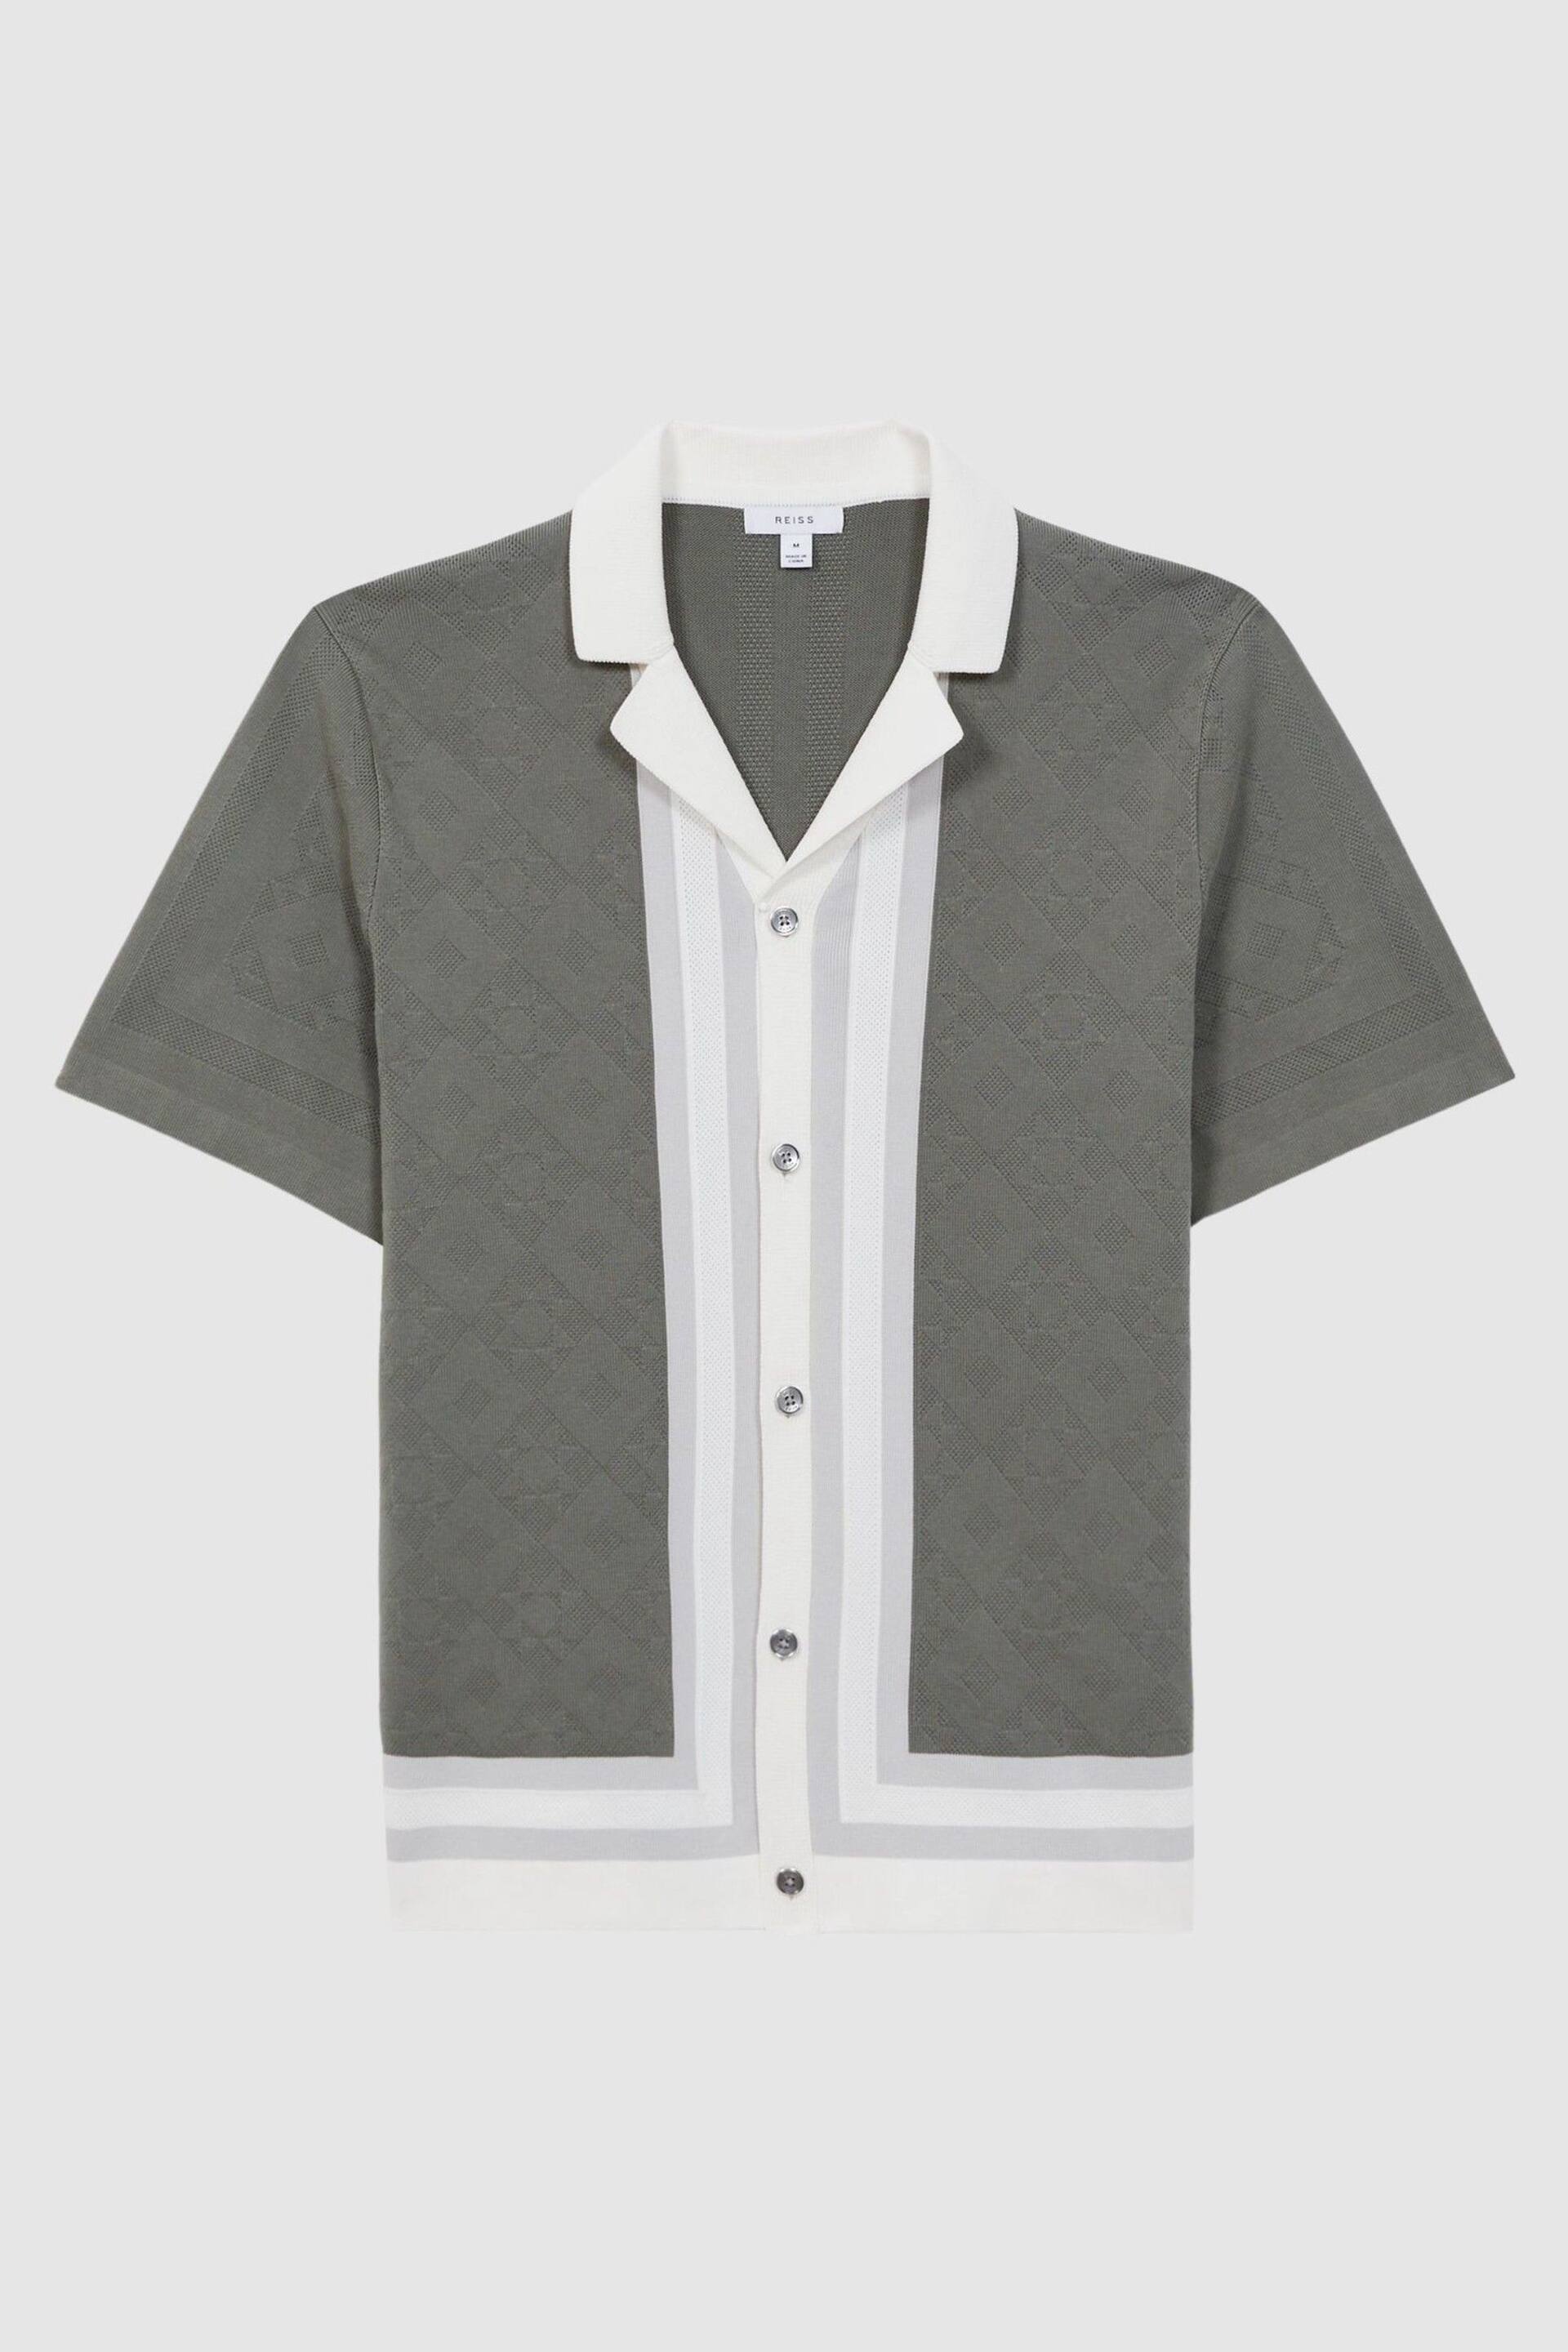 Reiss Sage Durban Cotton Knitted Cuban Collar Shirt - Image 2 of 5